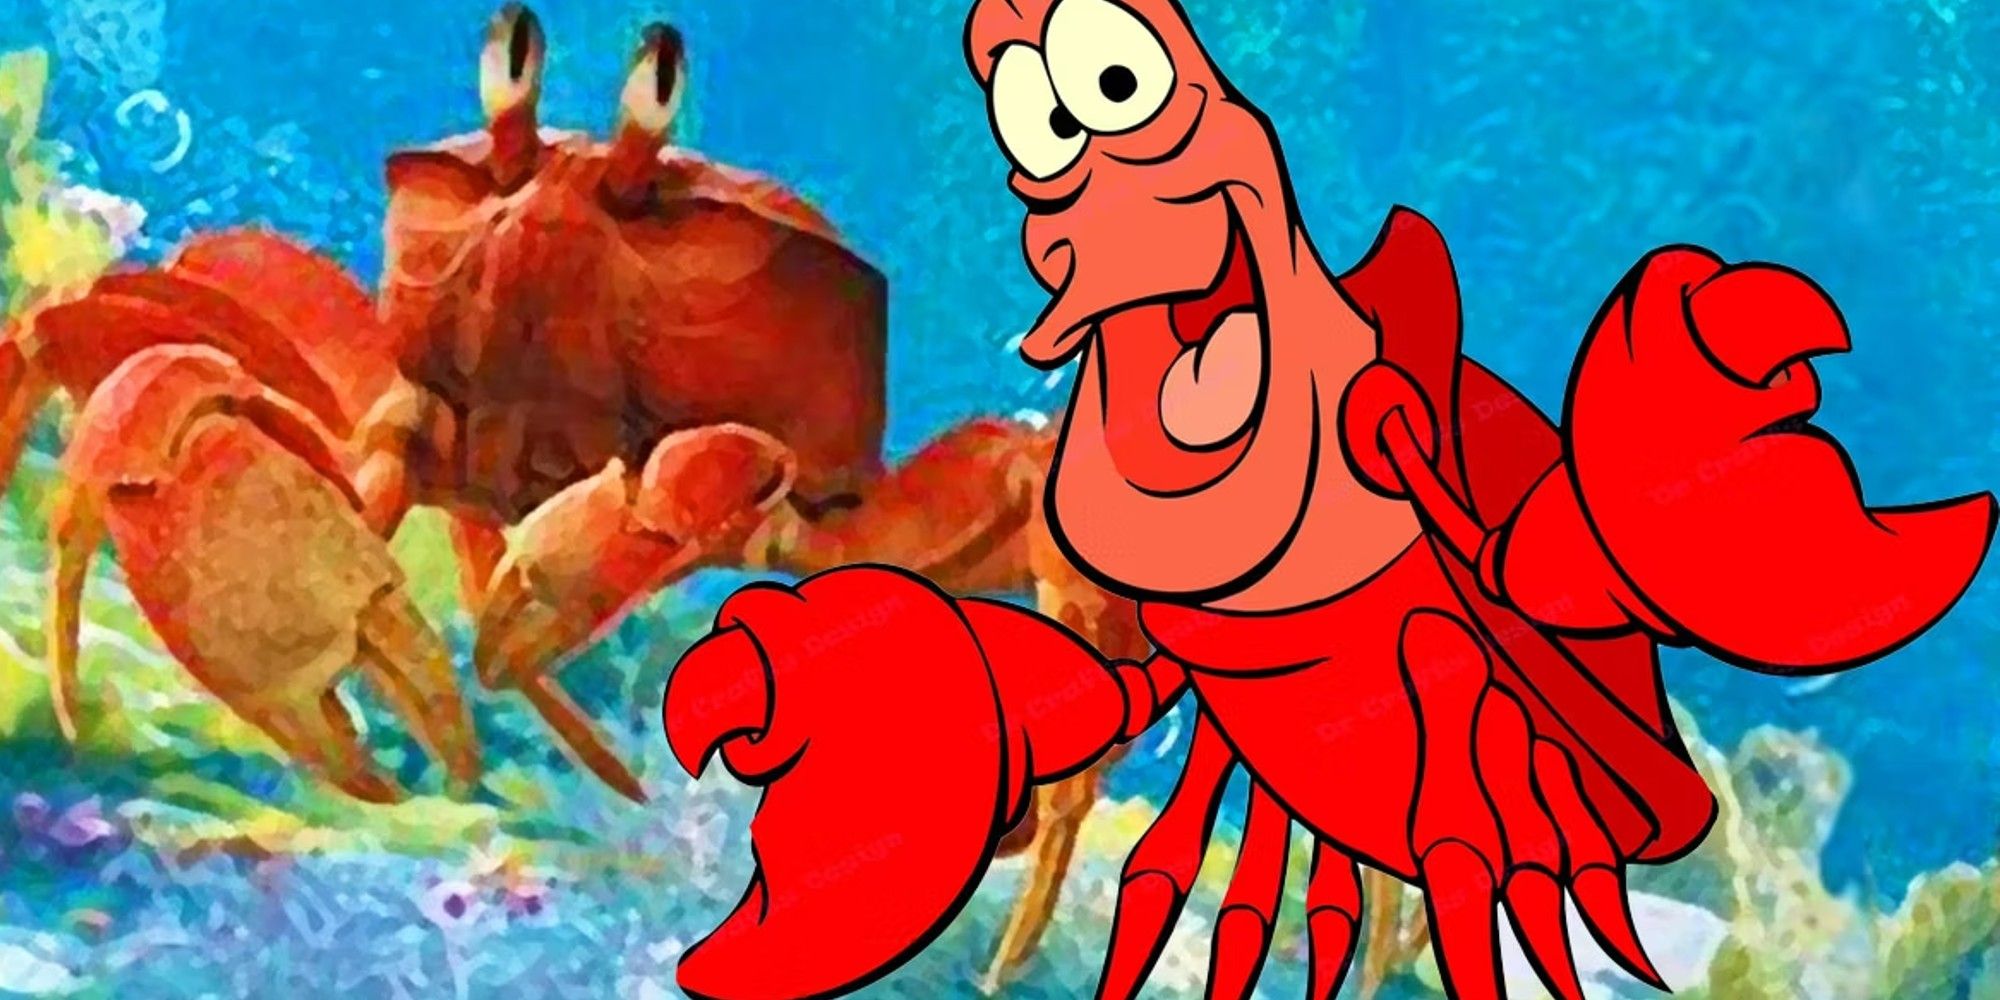 is sebastian a crab or lobster